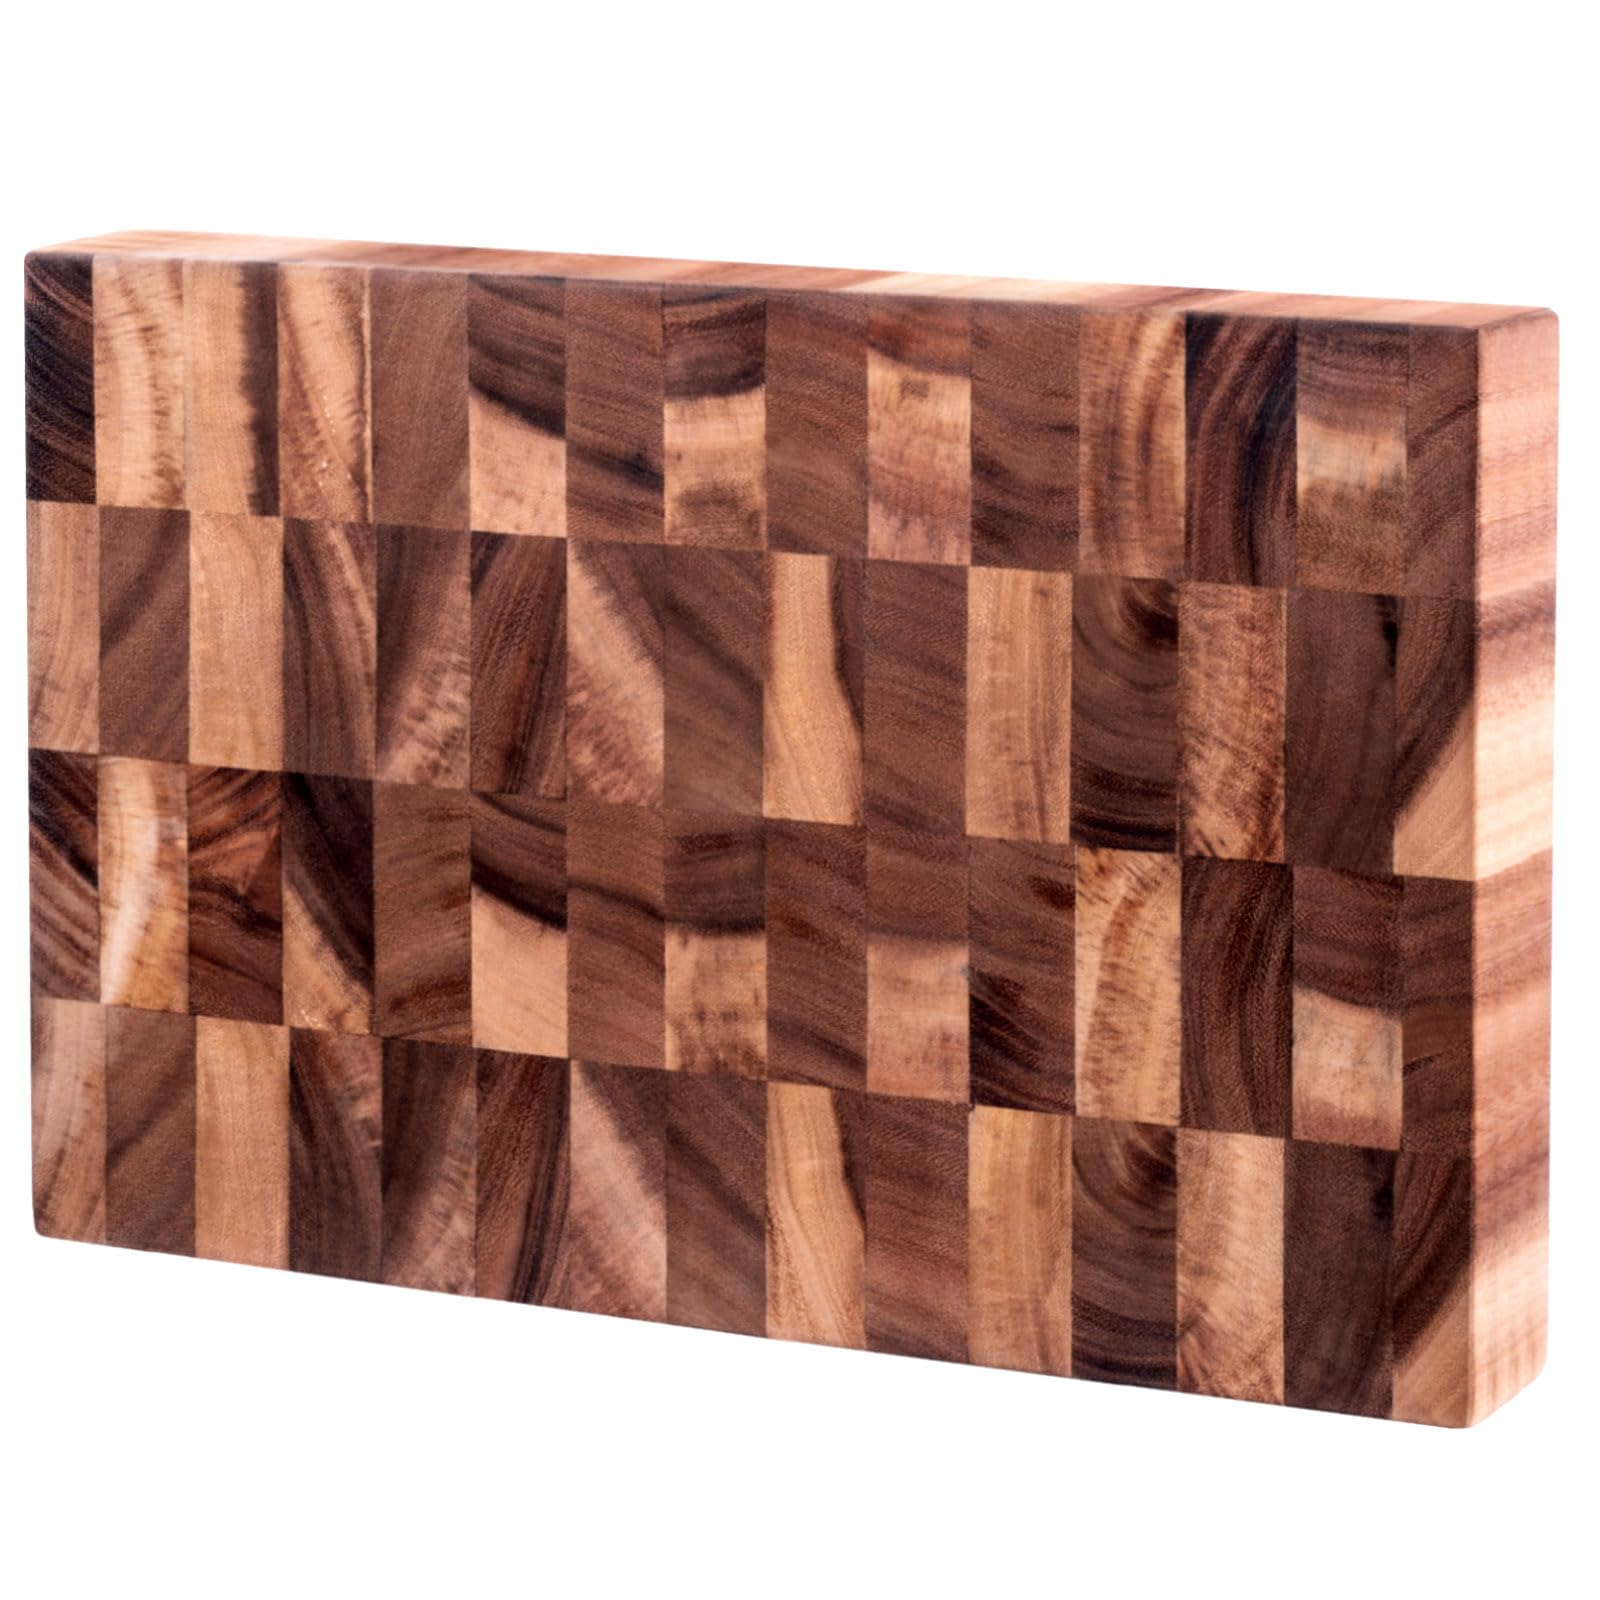 Shangrun Walnut Wood Board